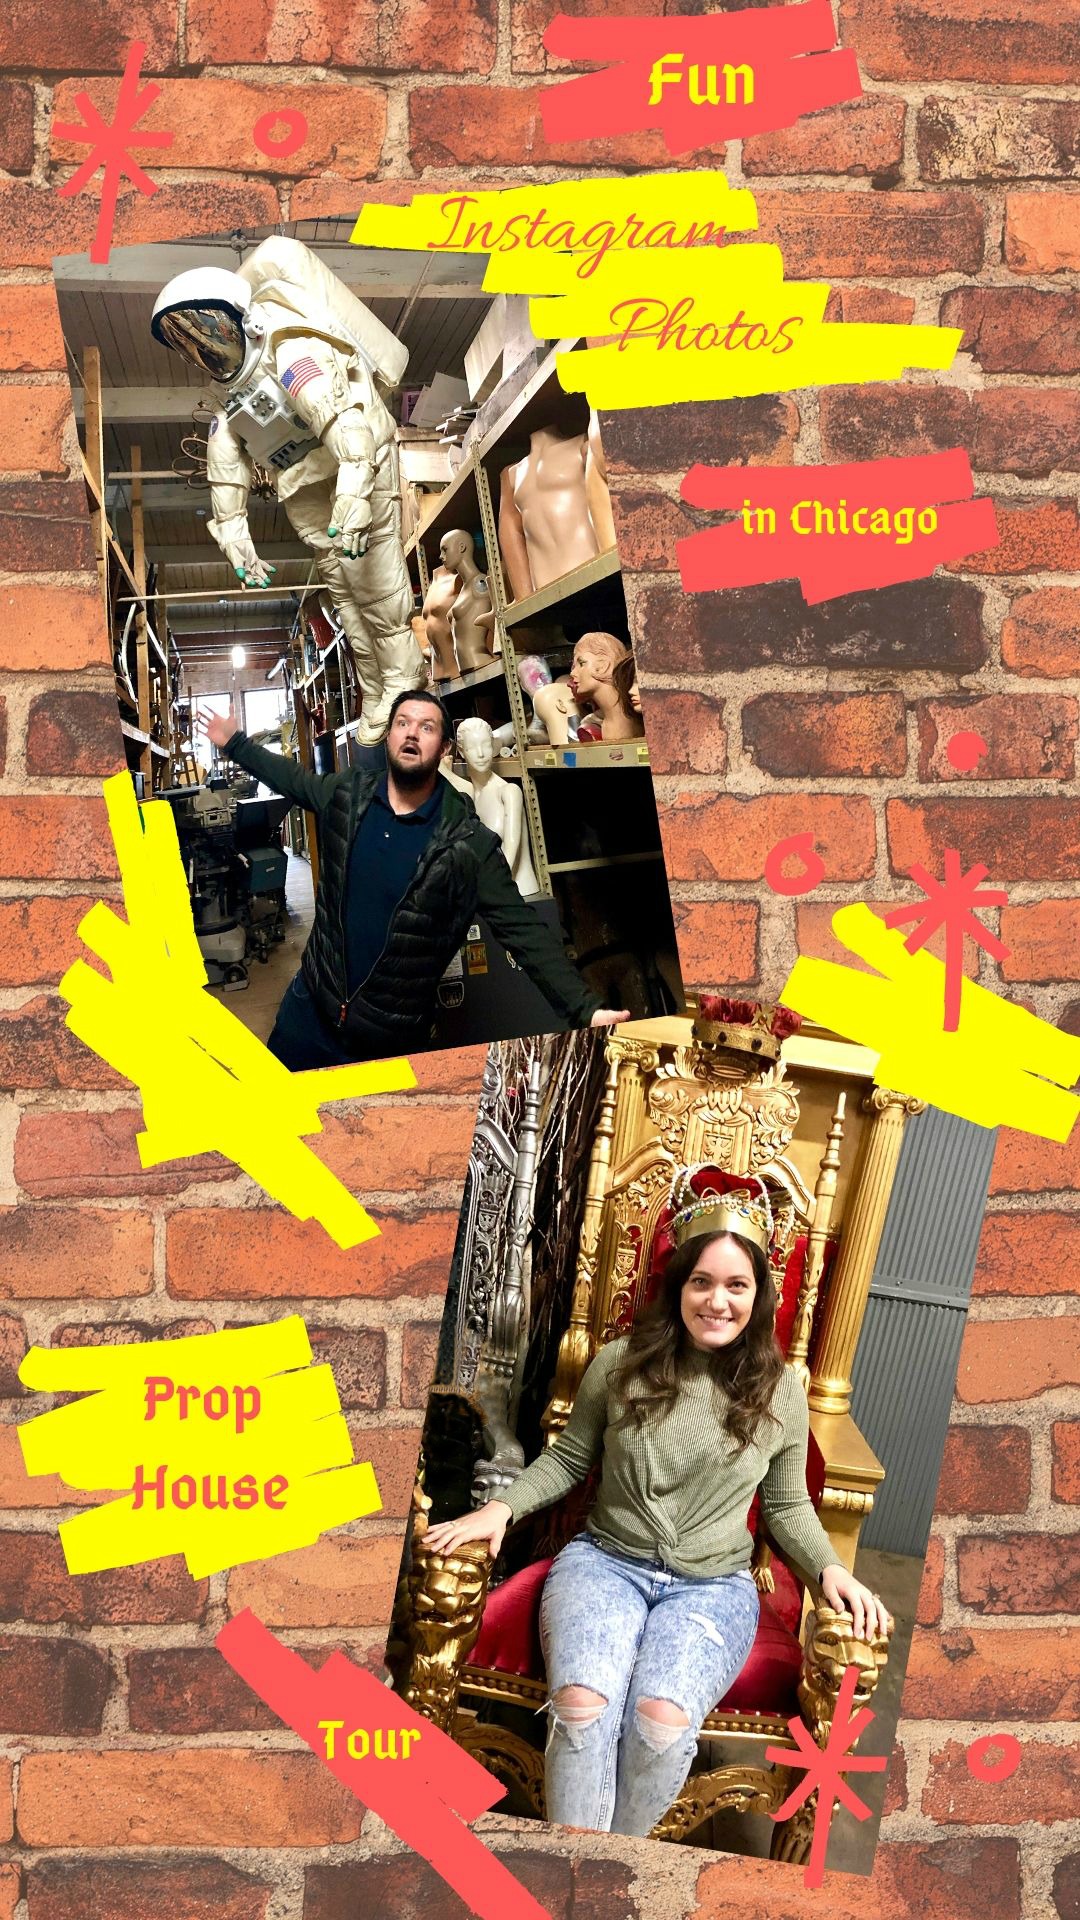 Chicago Prop House Tour #movieprops #moviememorabilia #prophousetour #chicagotour #bridgeport #instagramtravel #hiddenchicago #zapsprops